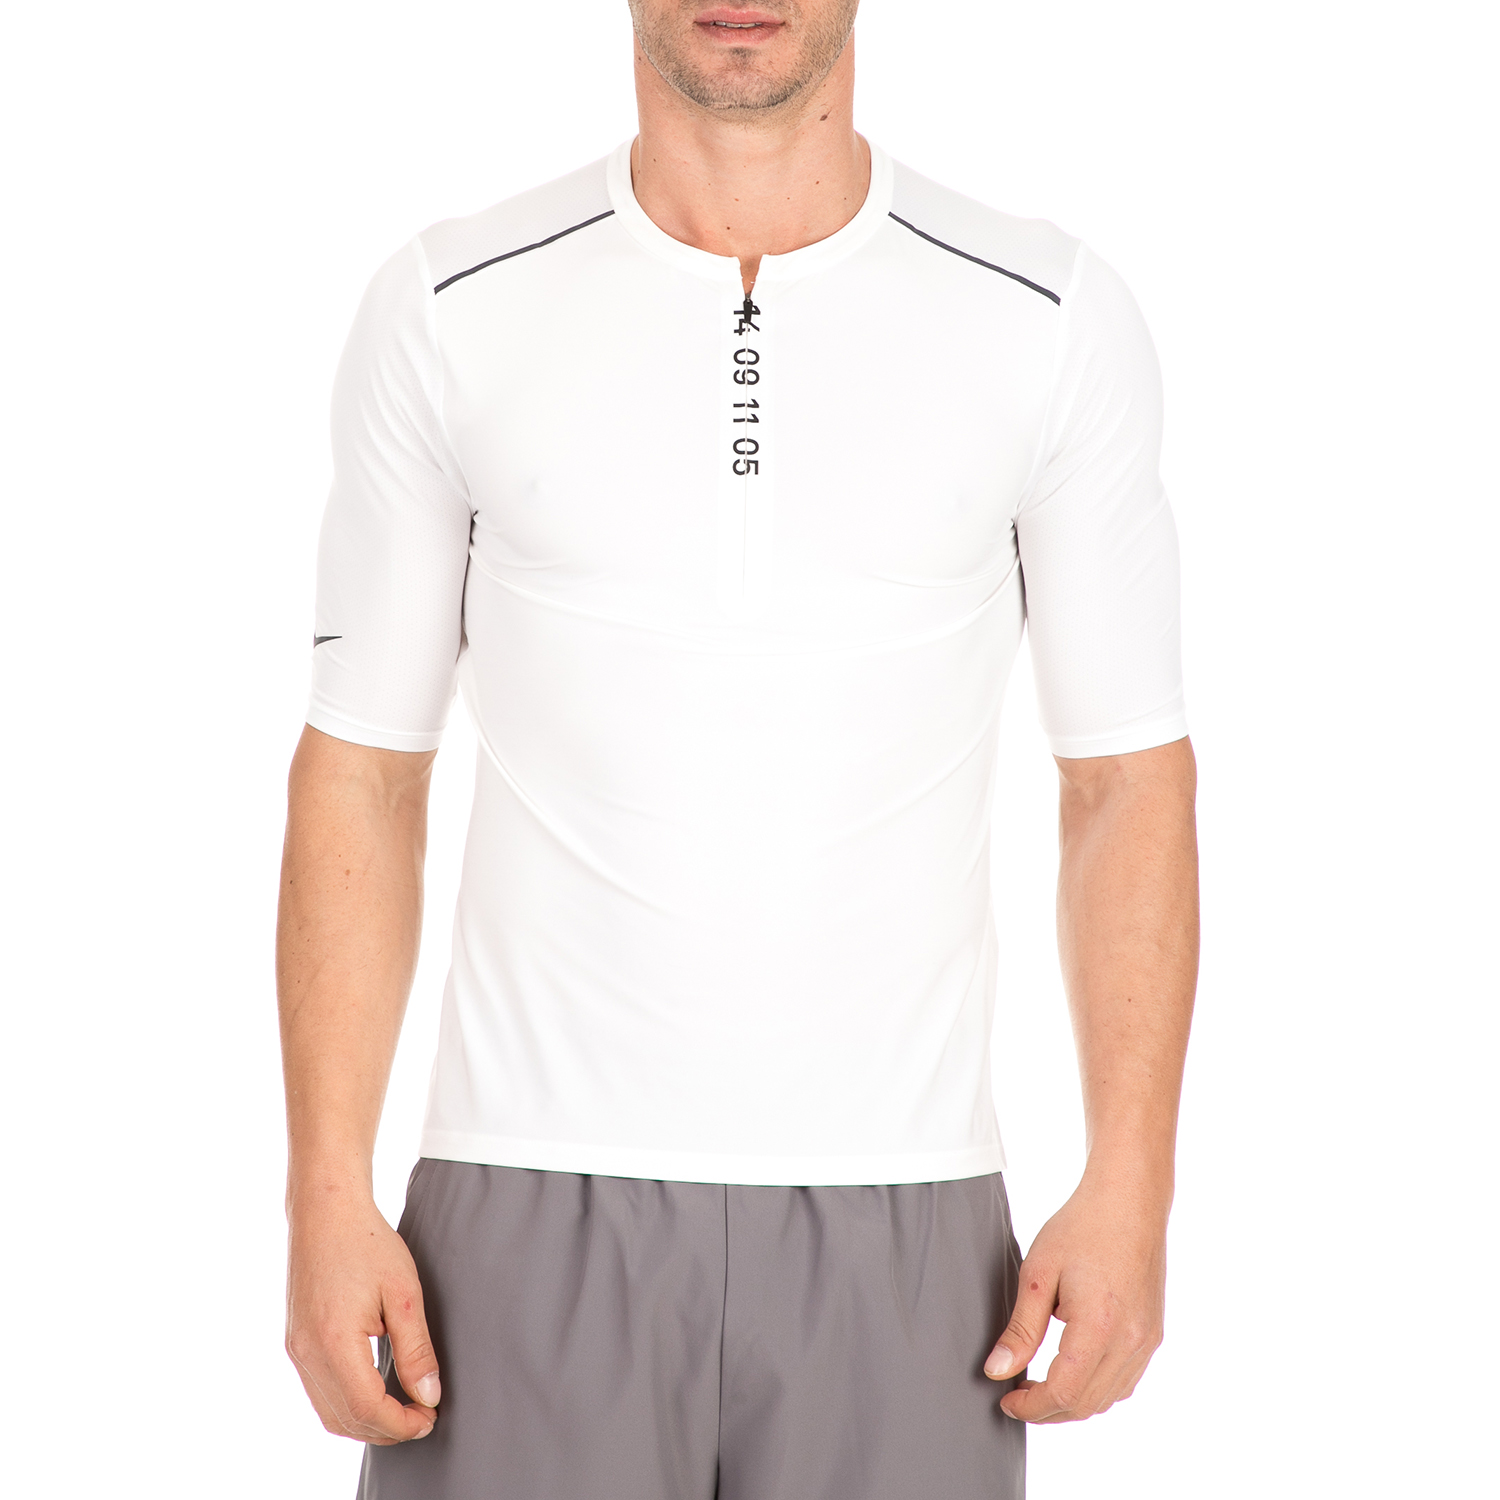 NIKE - Ανδρικό αθλητικό t-shirt NIKE TCH PCK HZ SS λευκό Ανδρικά/Ρούχα/Αθλητικά/T-shirt